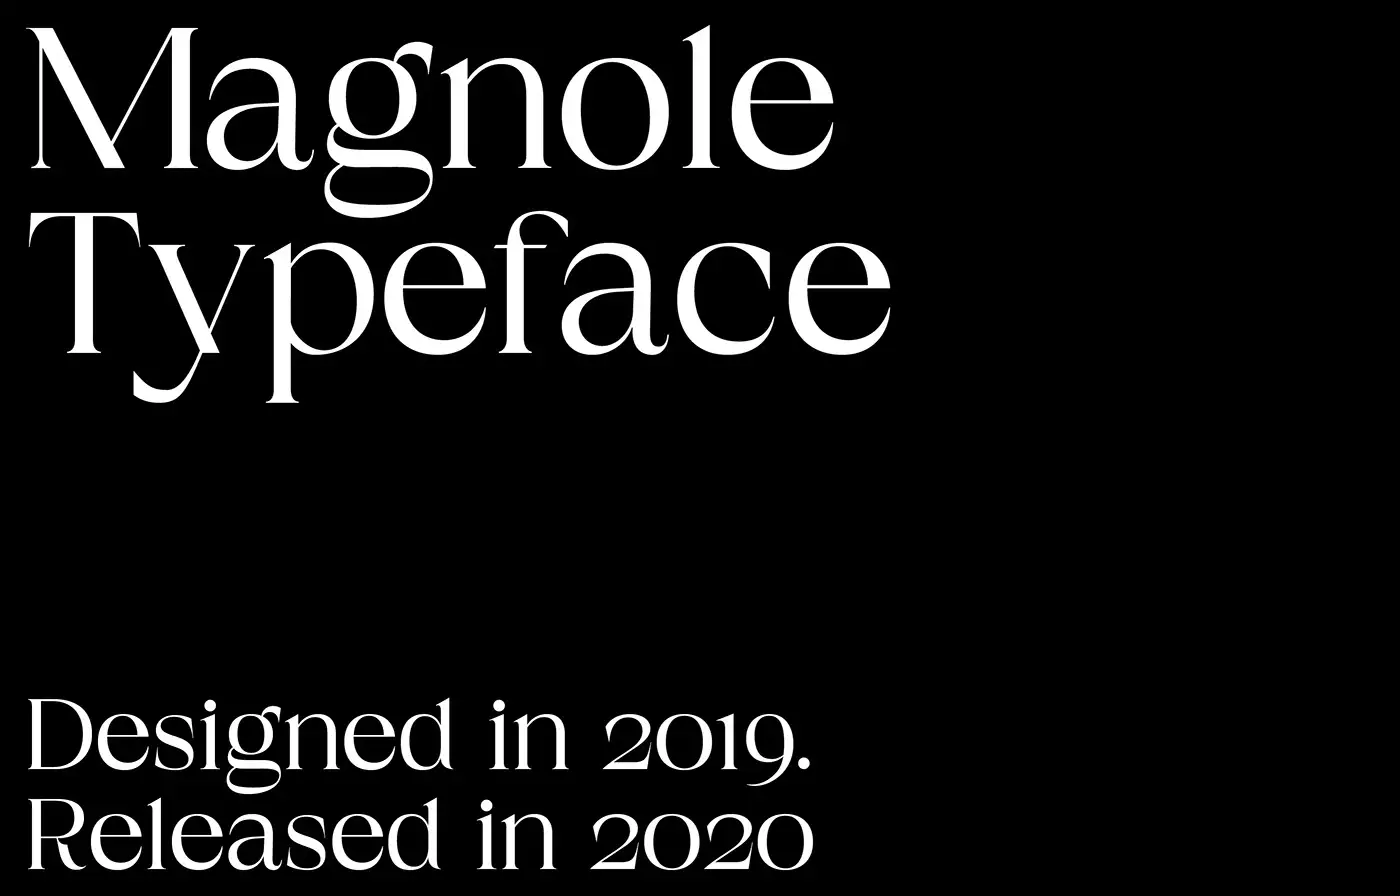 Magnole Typeface